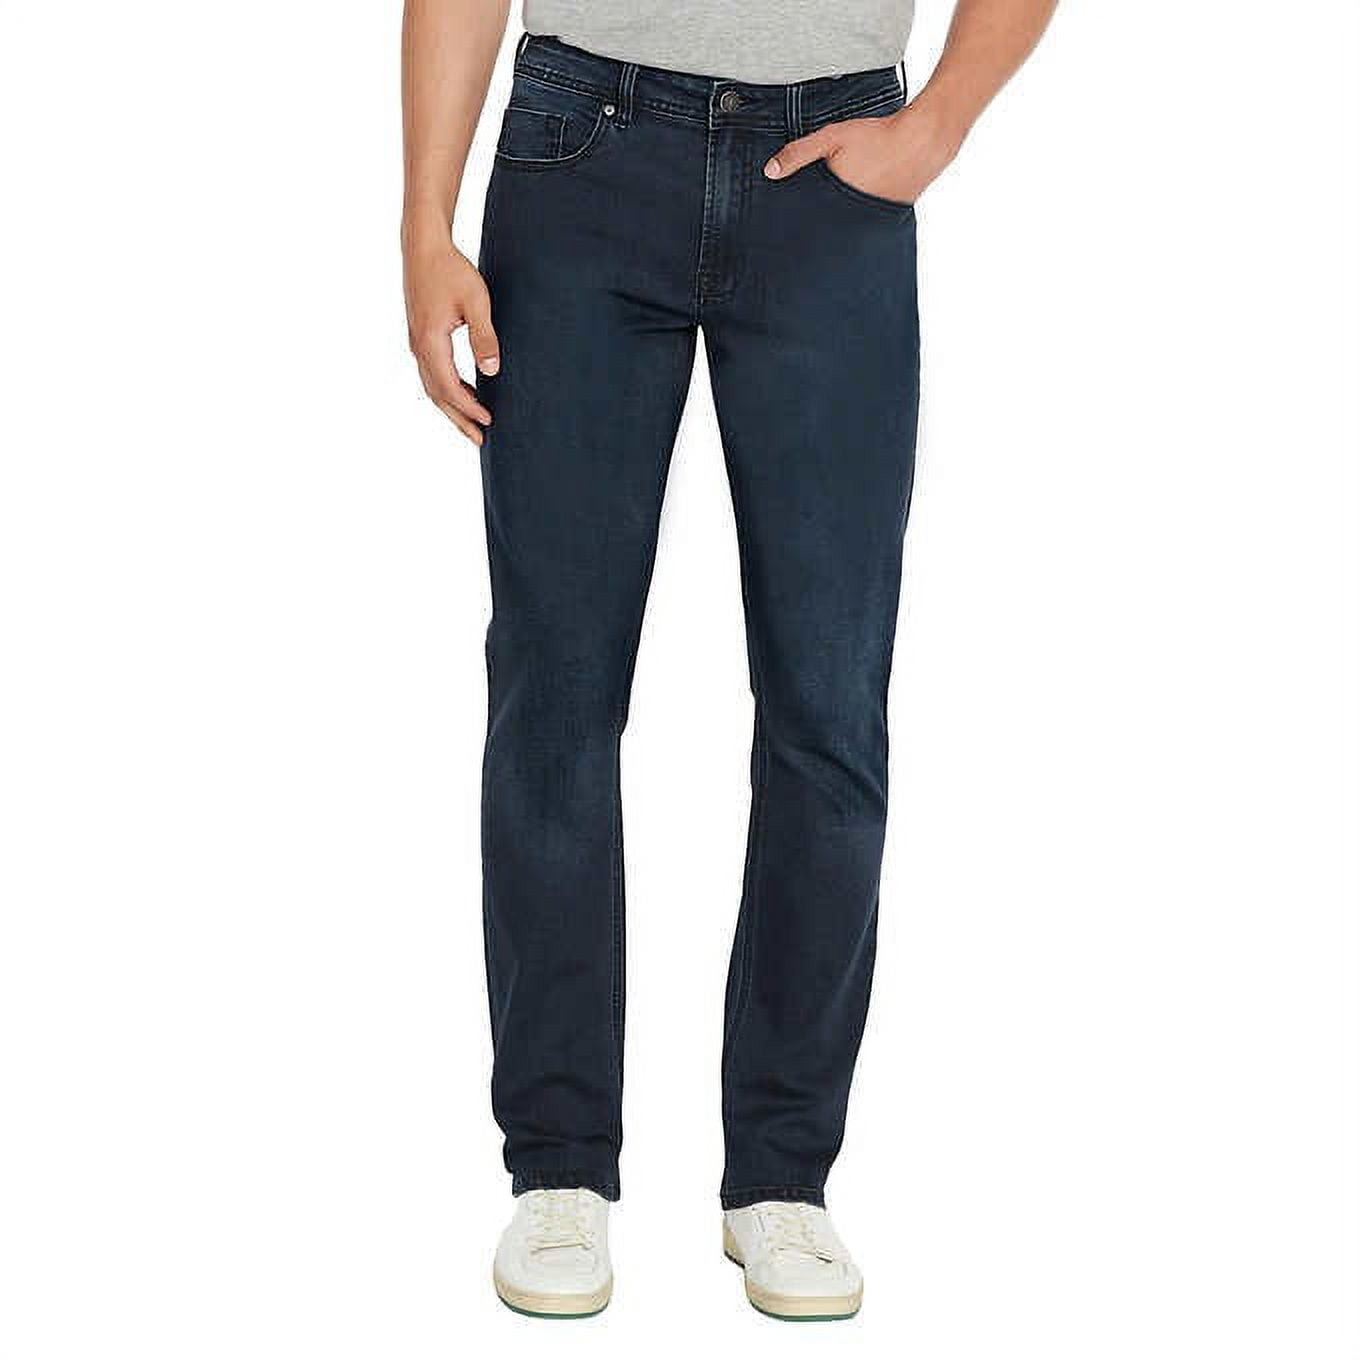 Buffalo Men's Size 38x32 Axel Super Plush Slim Fit Jeans, Dark Blue